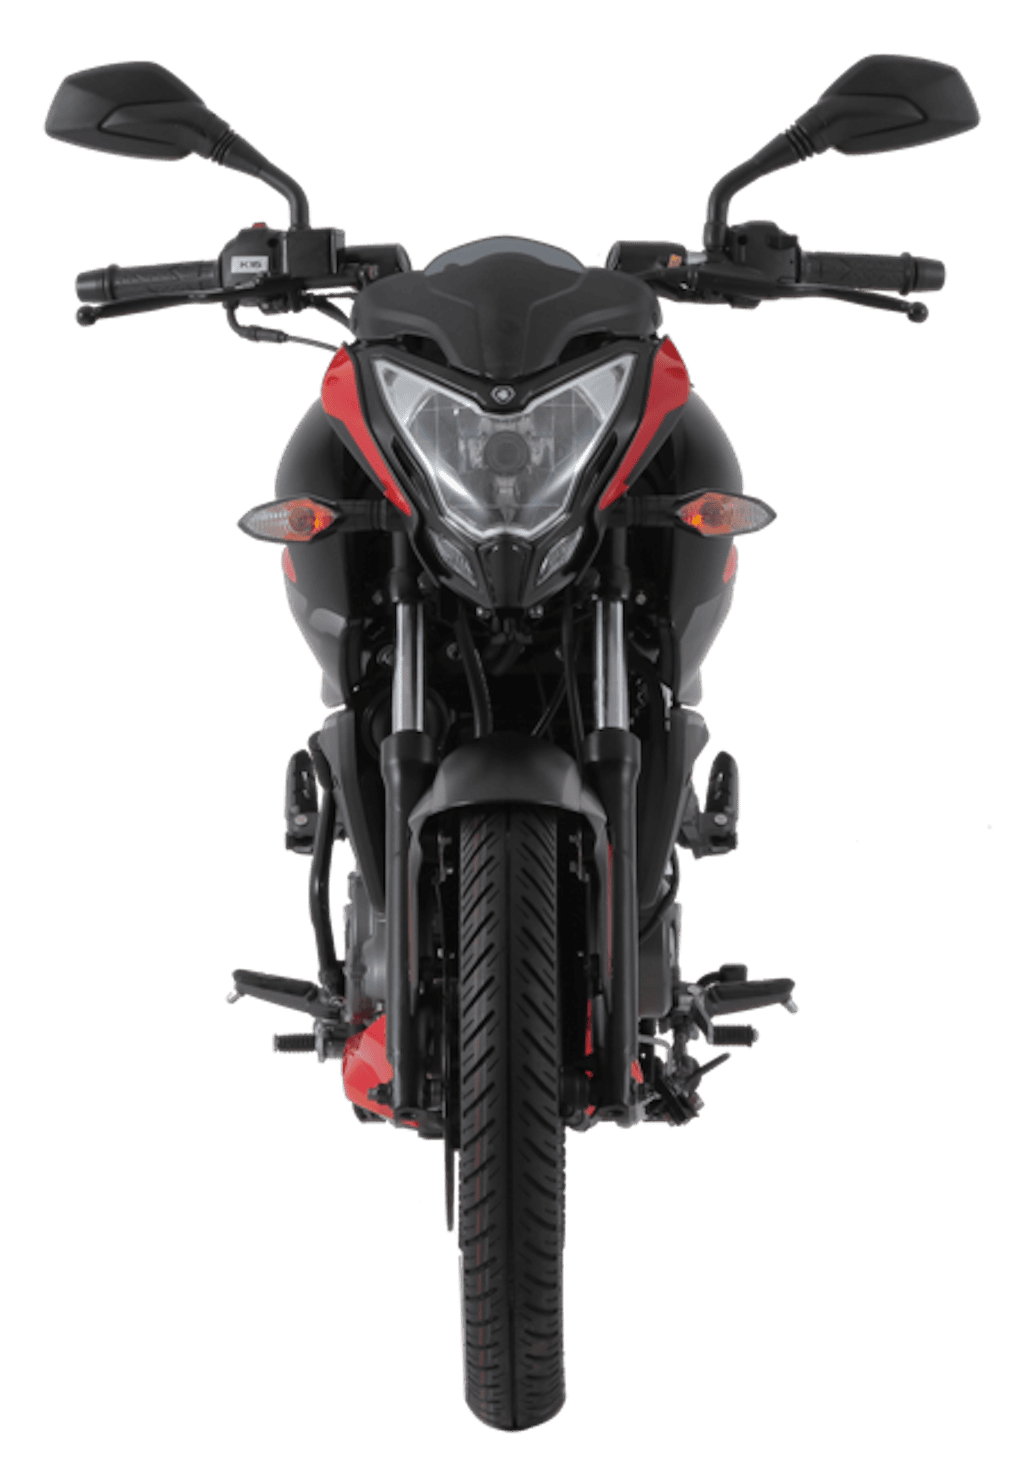 Naked bike Kawasaki Rouser NS160 ra mắt, giá từ 37,3 triệu ảnh 3